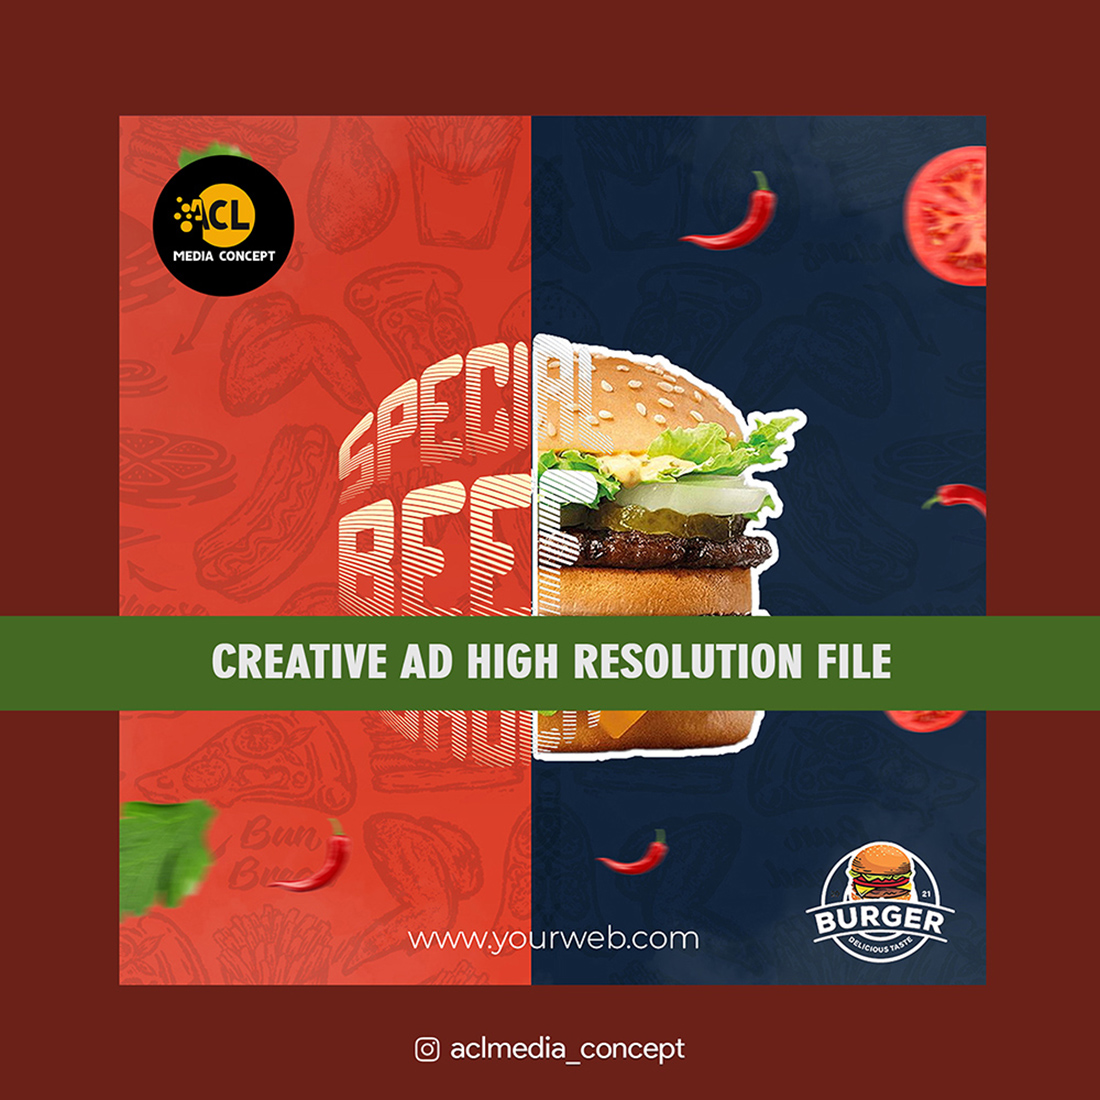 Burger Creative ad cover image.